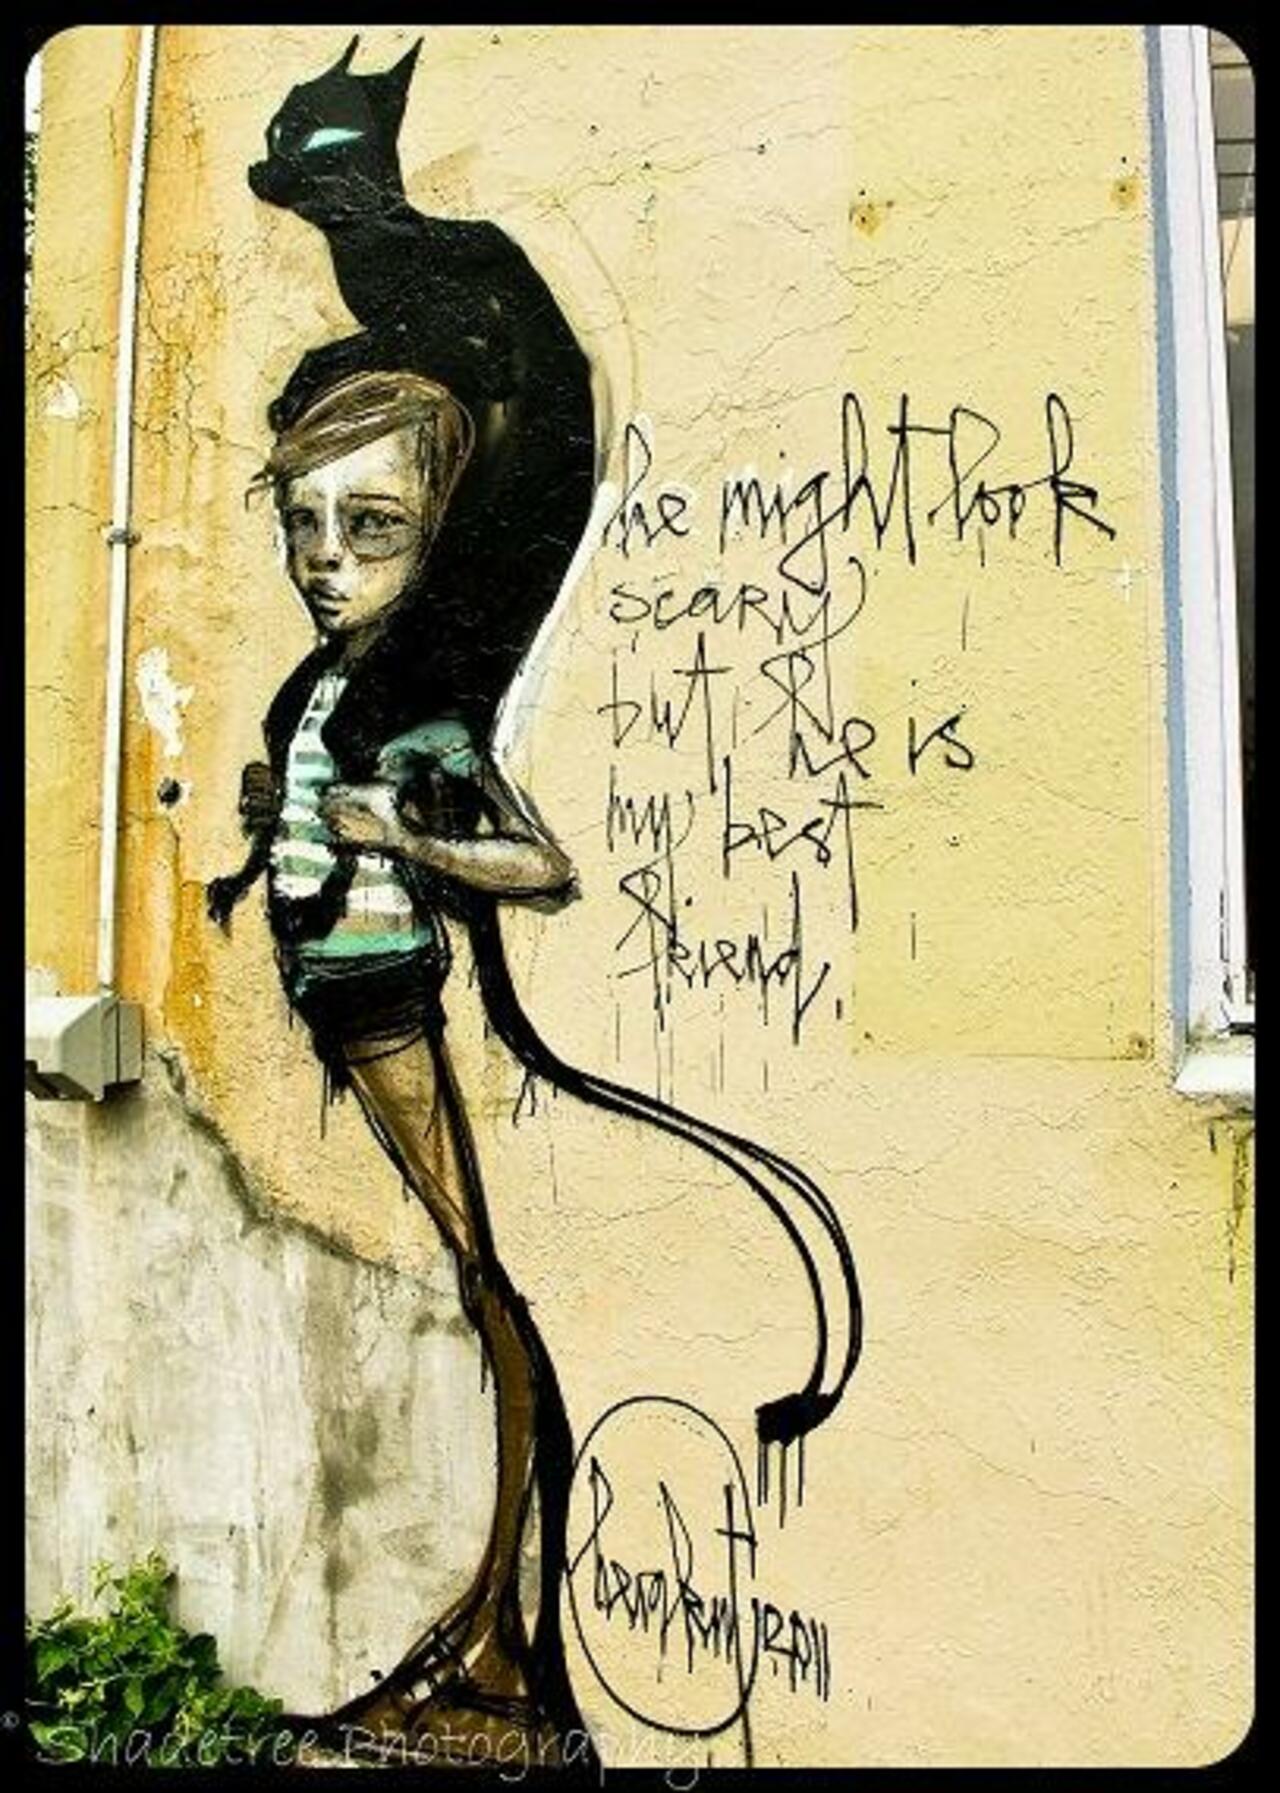 “@5putnik1: Unlikely Friendship • #streetart #graffiti #art #funky #dope . : http://t.co/U1GiT1gF3p